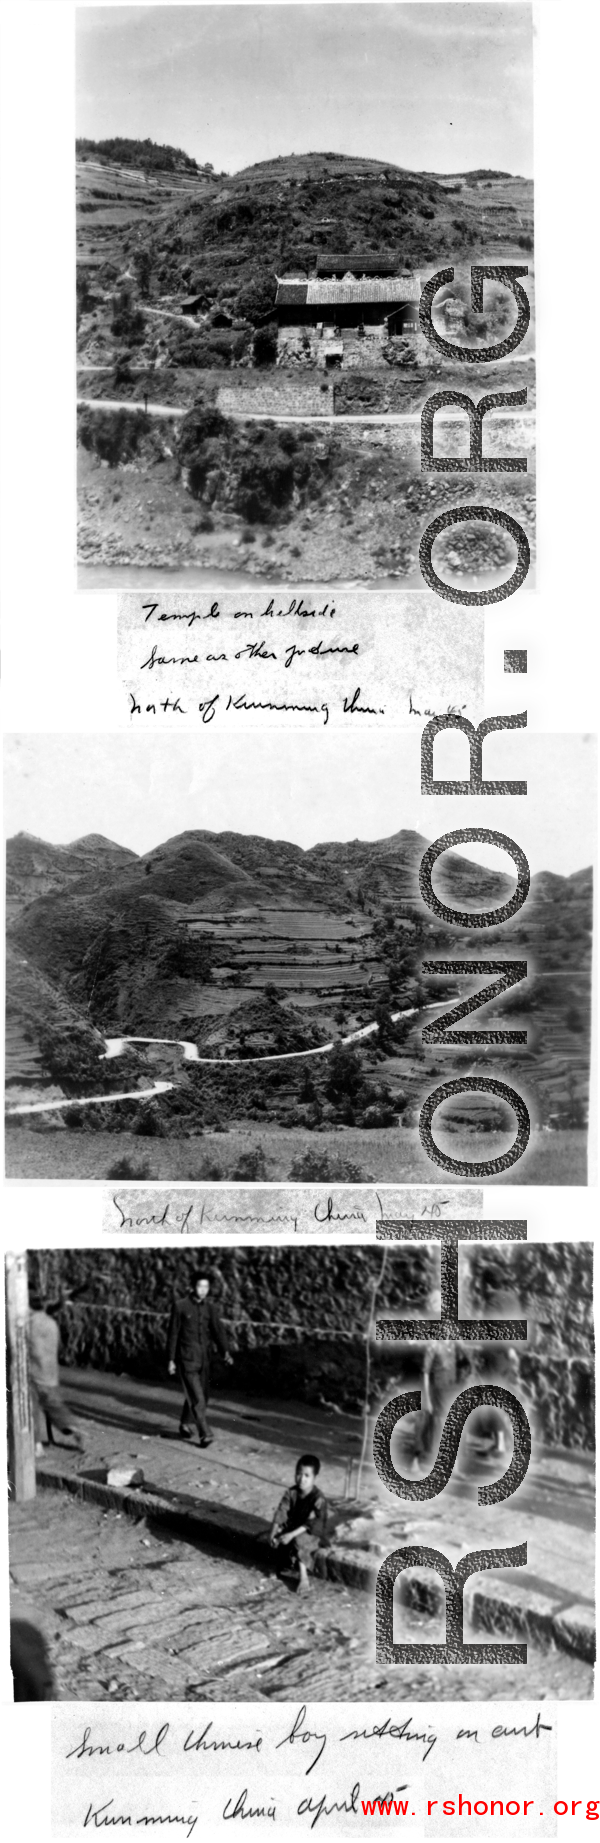 Scenes around Kunming: Rural road and temple, child, 1945.